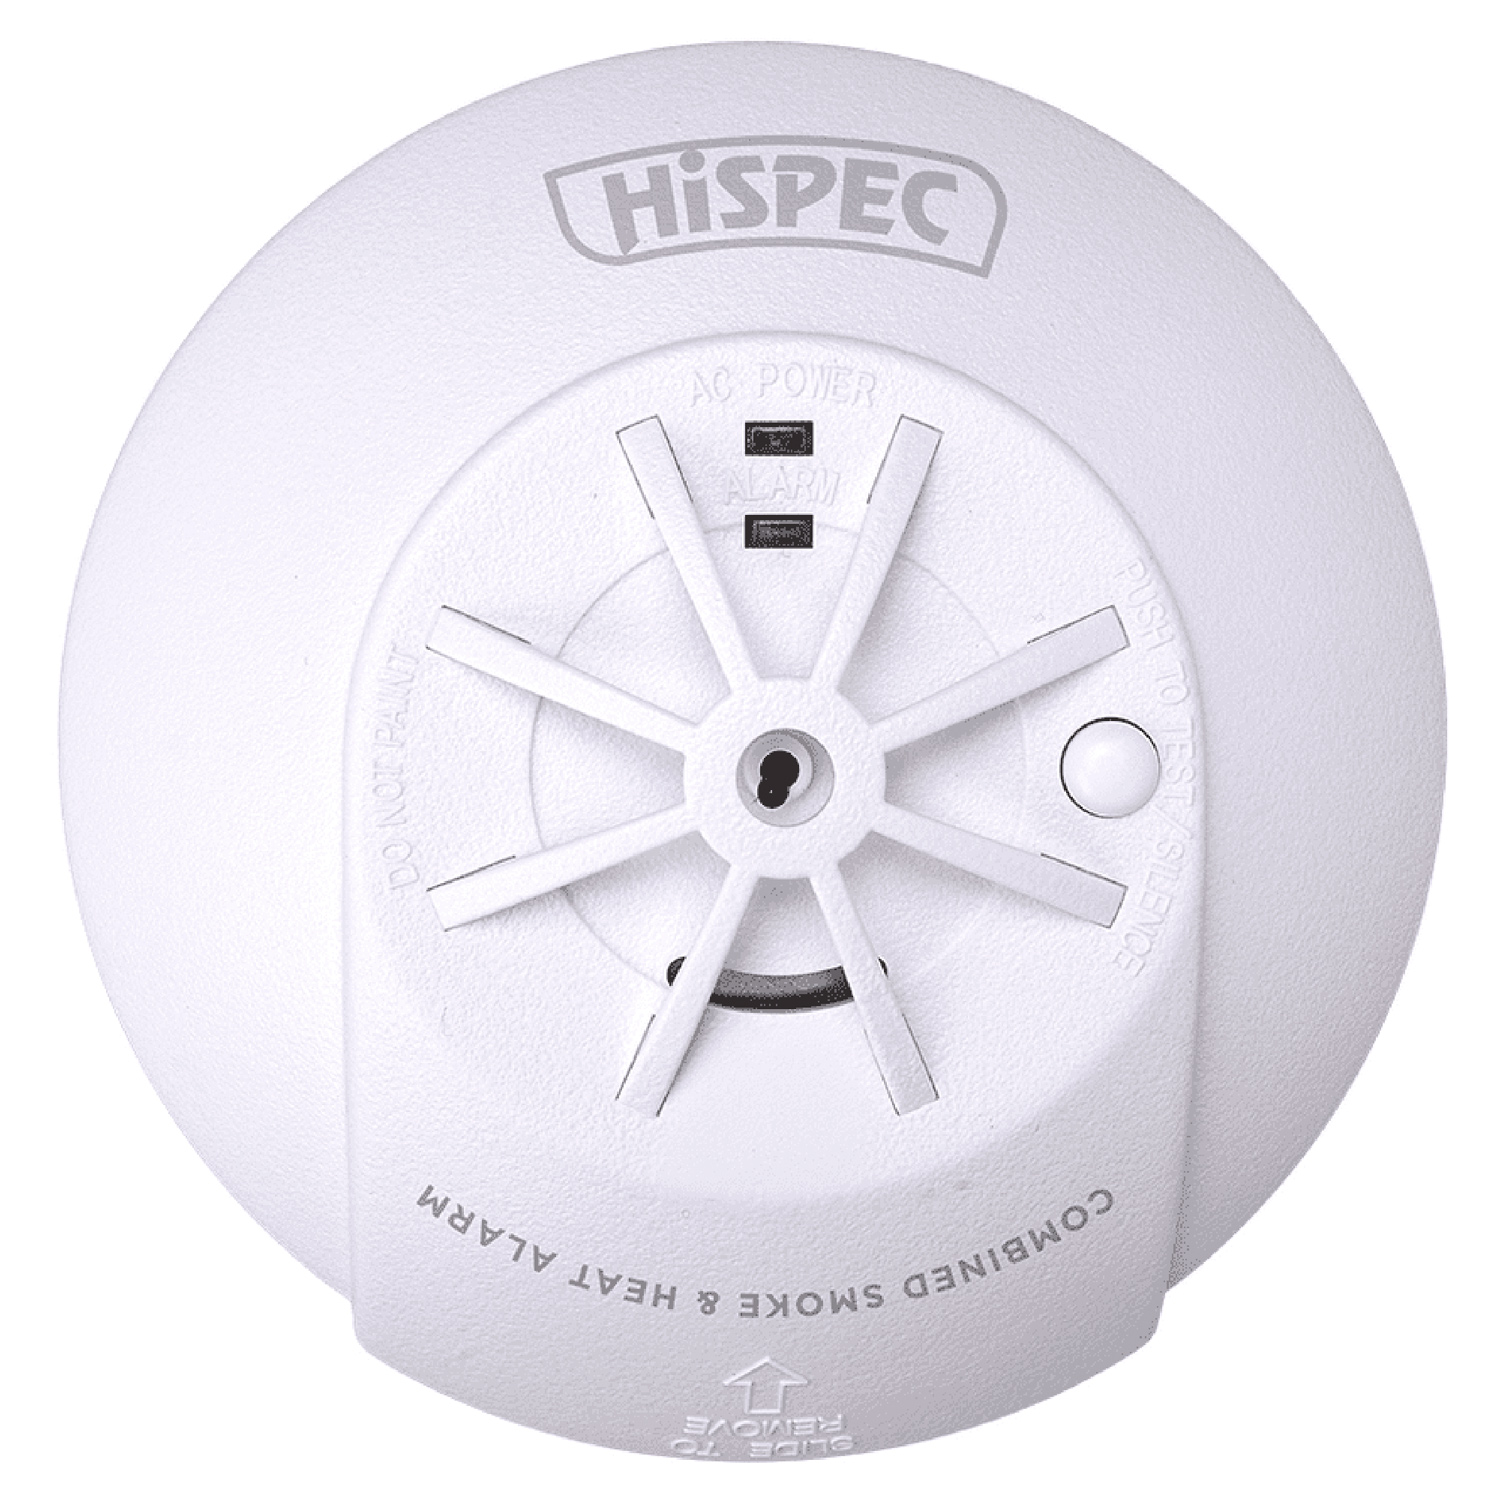 Hispec RF10-PRO Mains Powered Smoke & Heat Alarm 